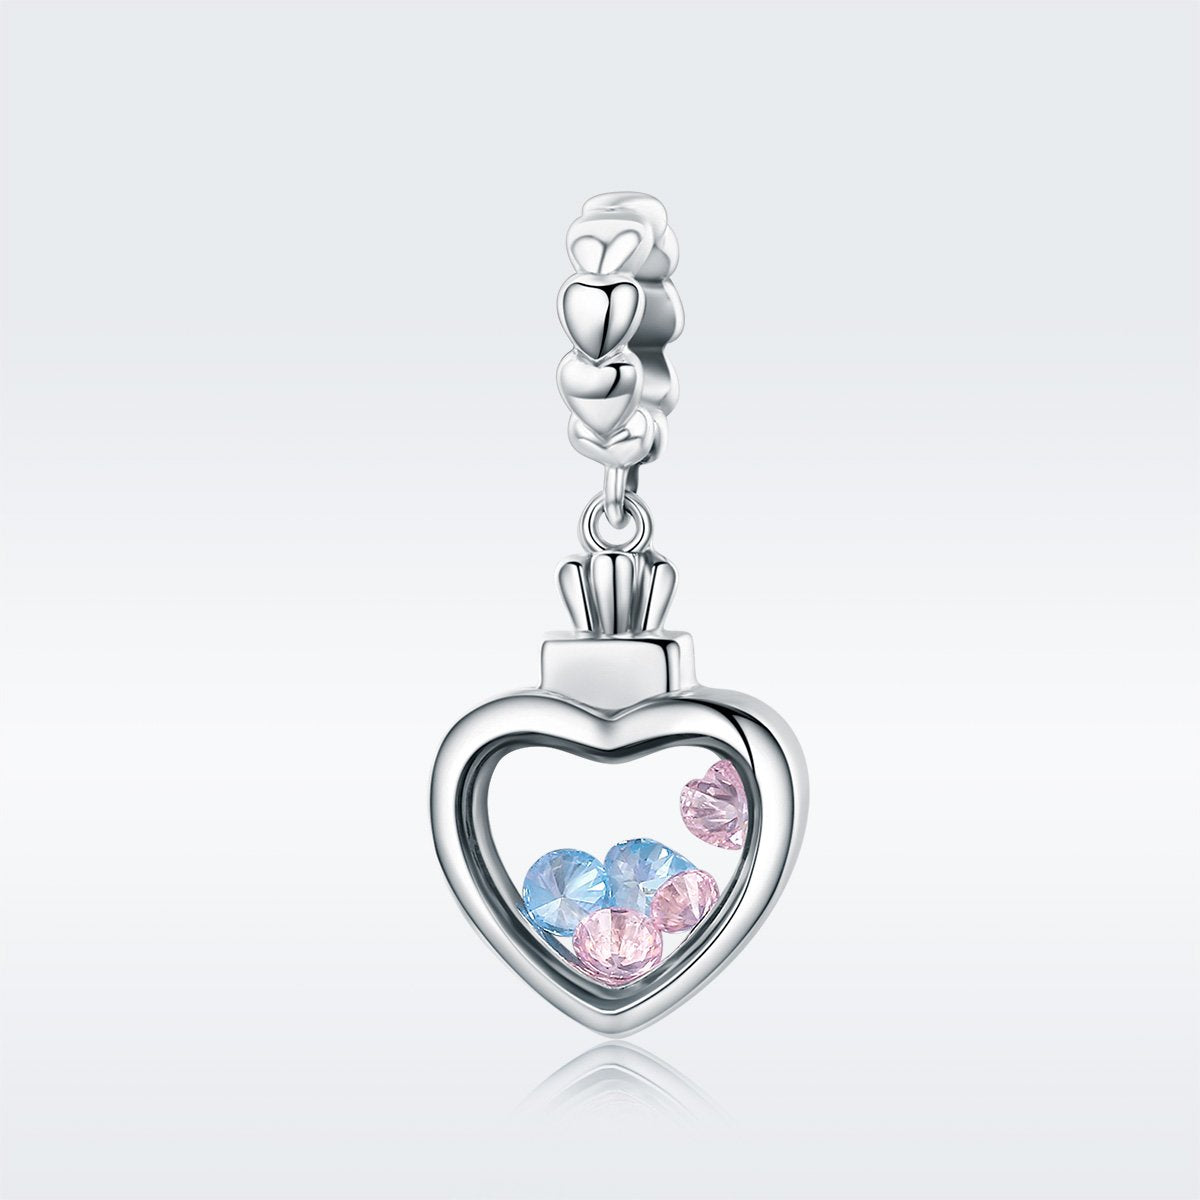 Sterling 925 silver charm the pretty heart bead pendant fits Pandora charm and European charm bracelet Xaxe.com